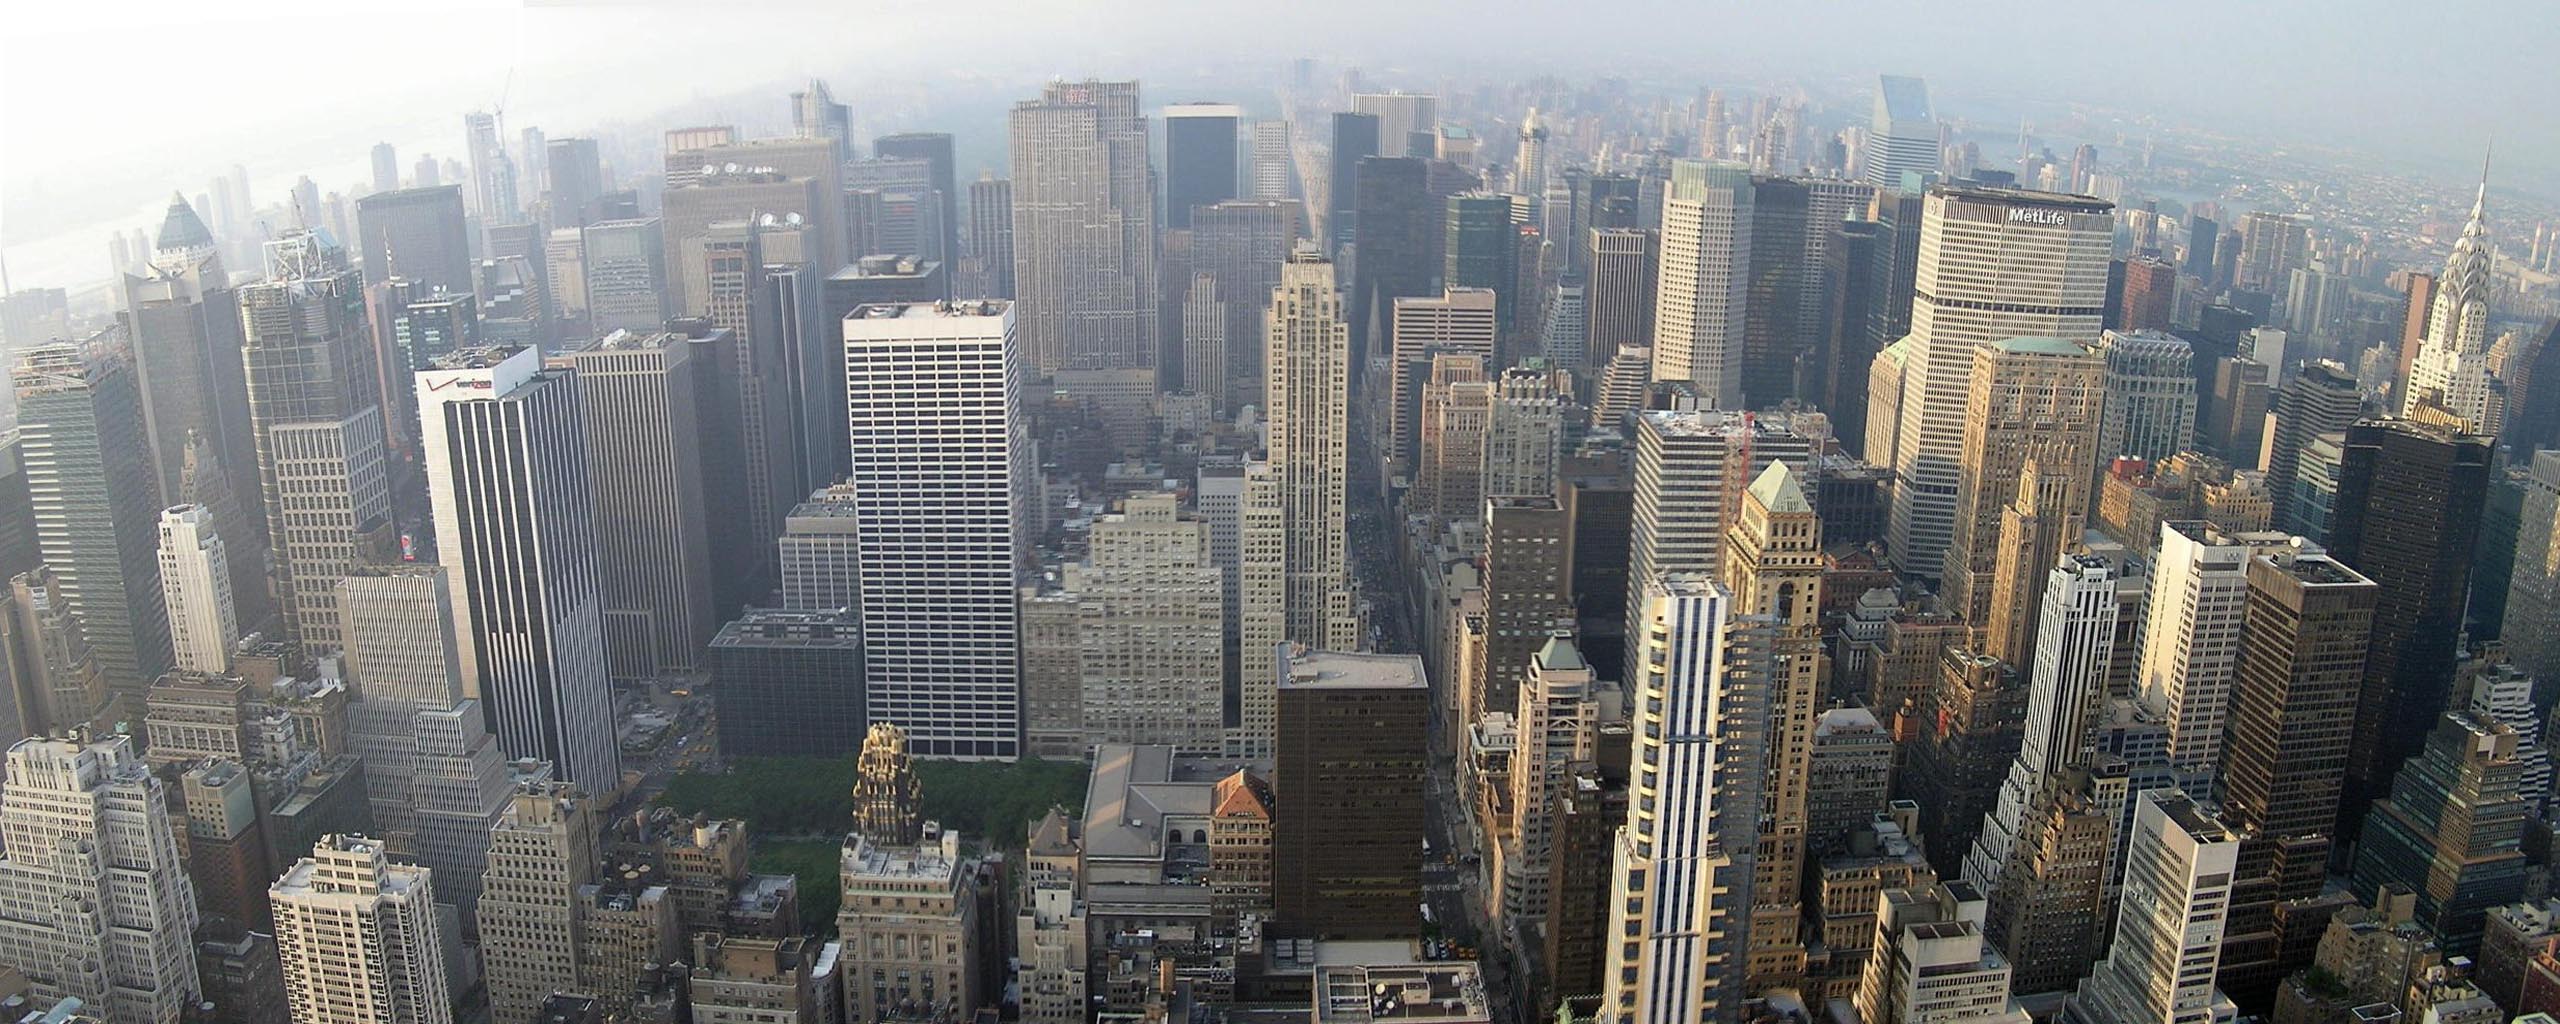 new york, skyscraper, man made, city, cityscape, manhattan